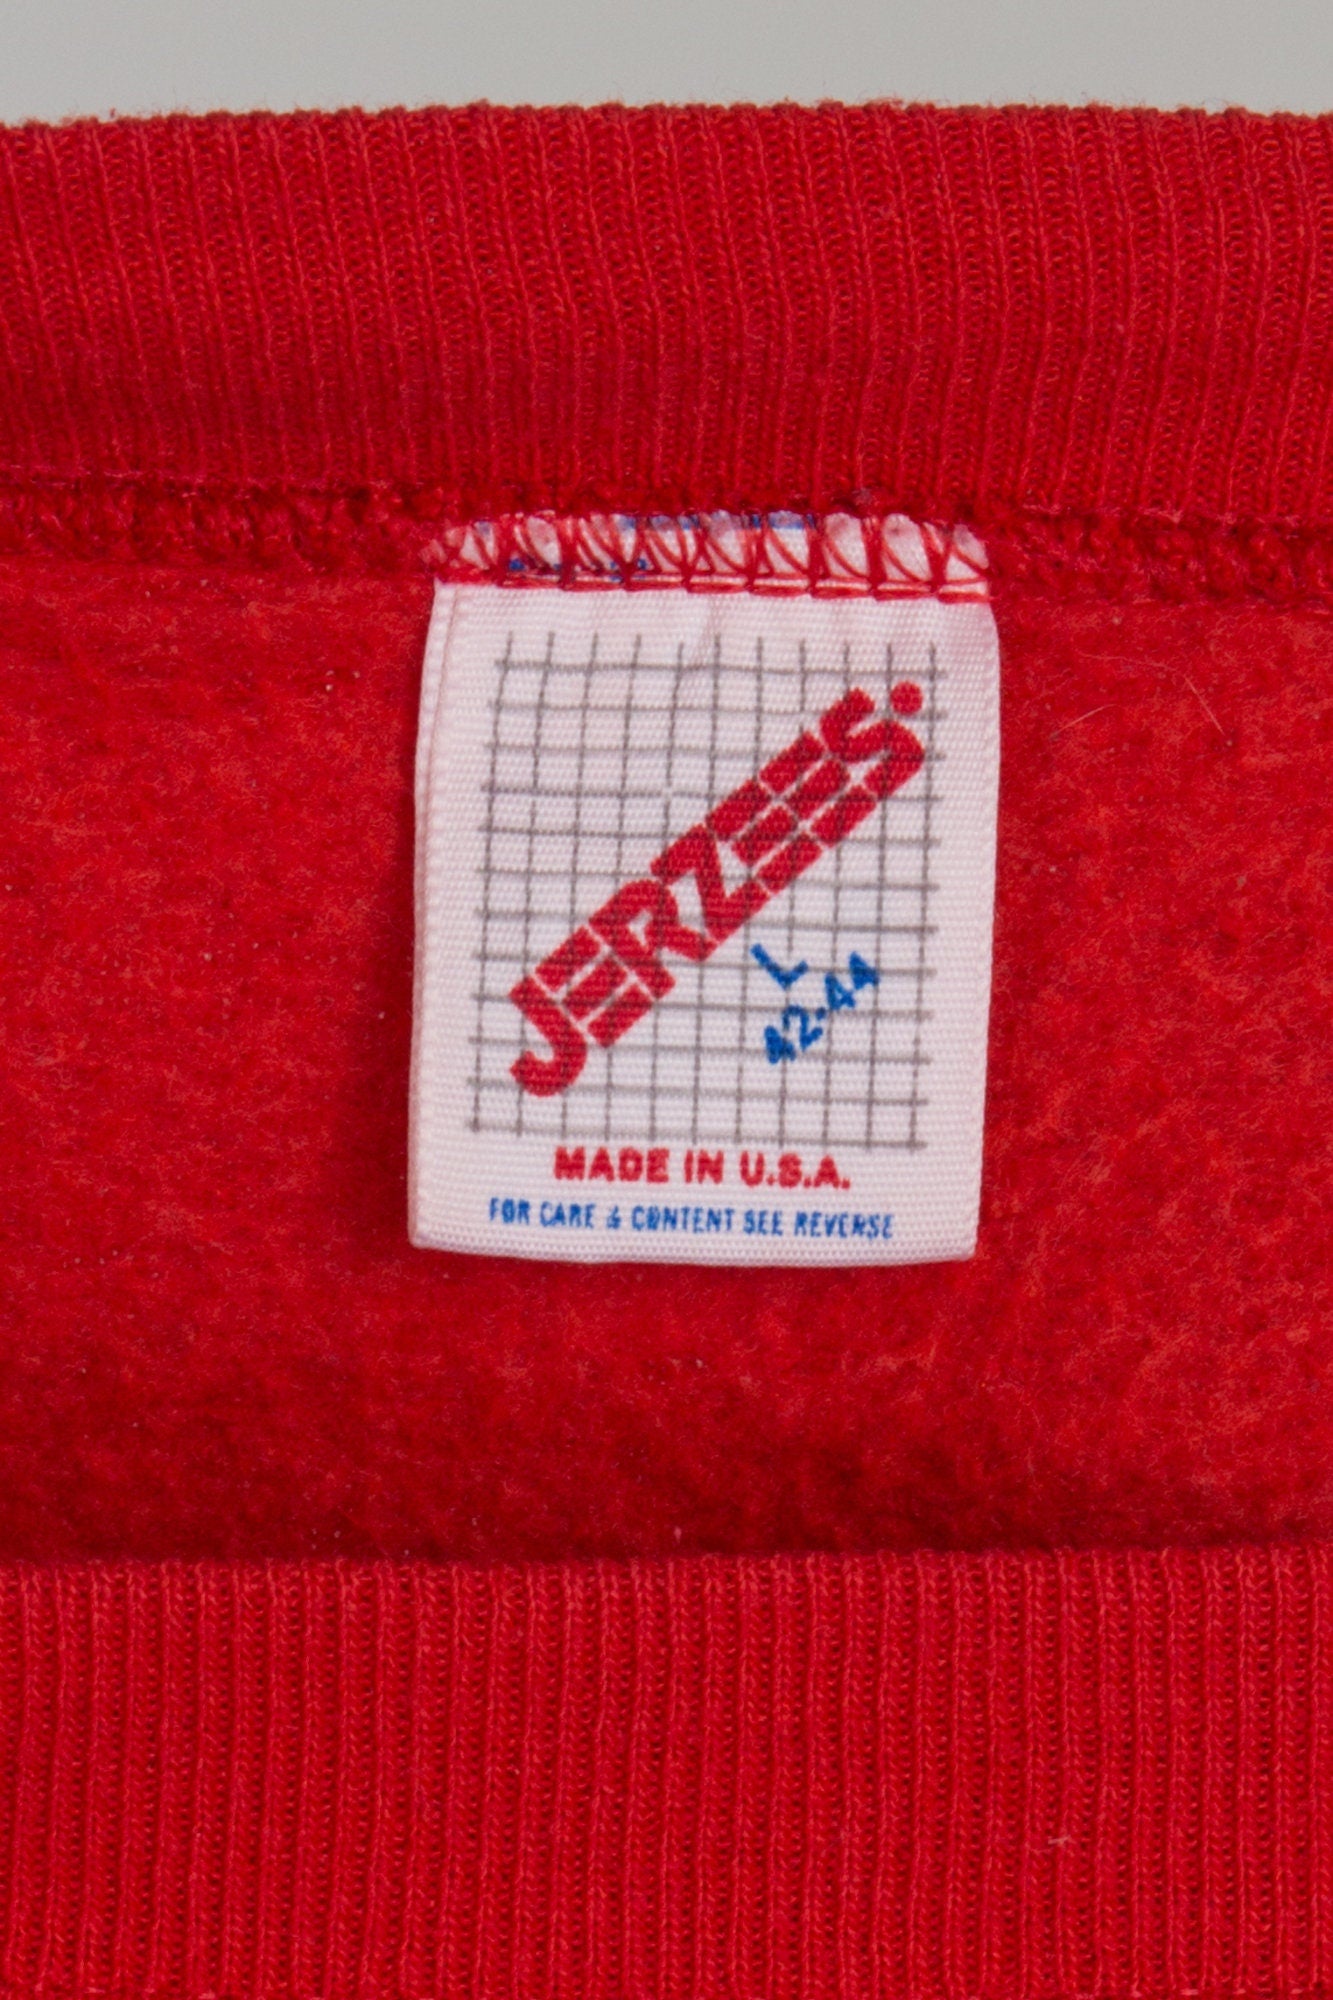 80s Red Raglan Sleeve Sweatshirt - Men's Medium, Women's Large 